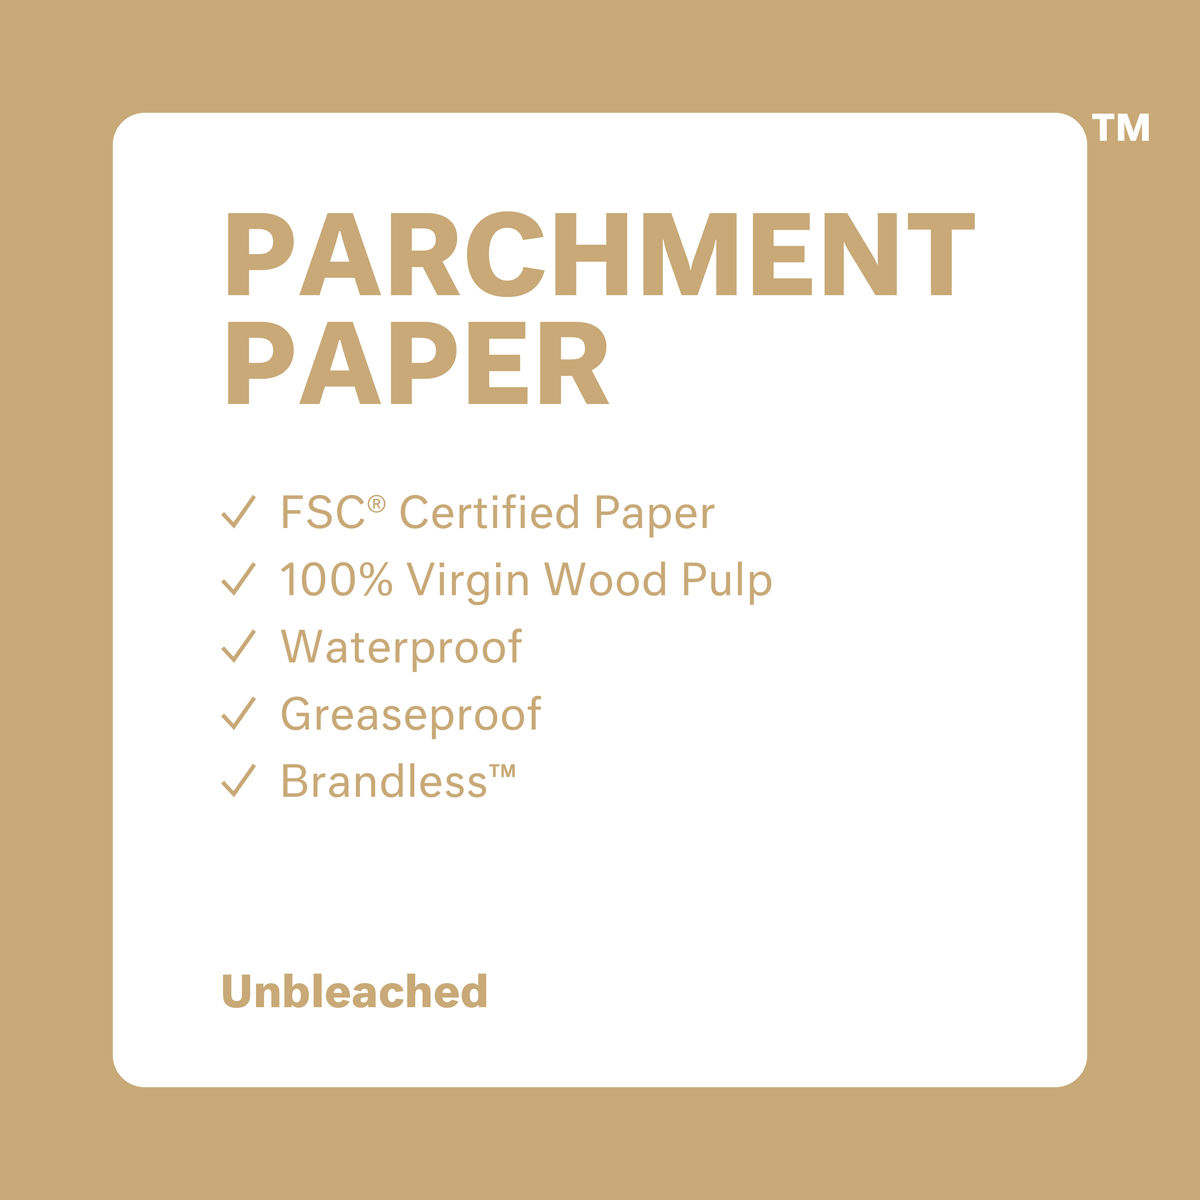 Parchment paper: fsc certified paper, 100% virgin wood pulp, waterproof, greaseproof, brandless.  Unbleached.